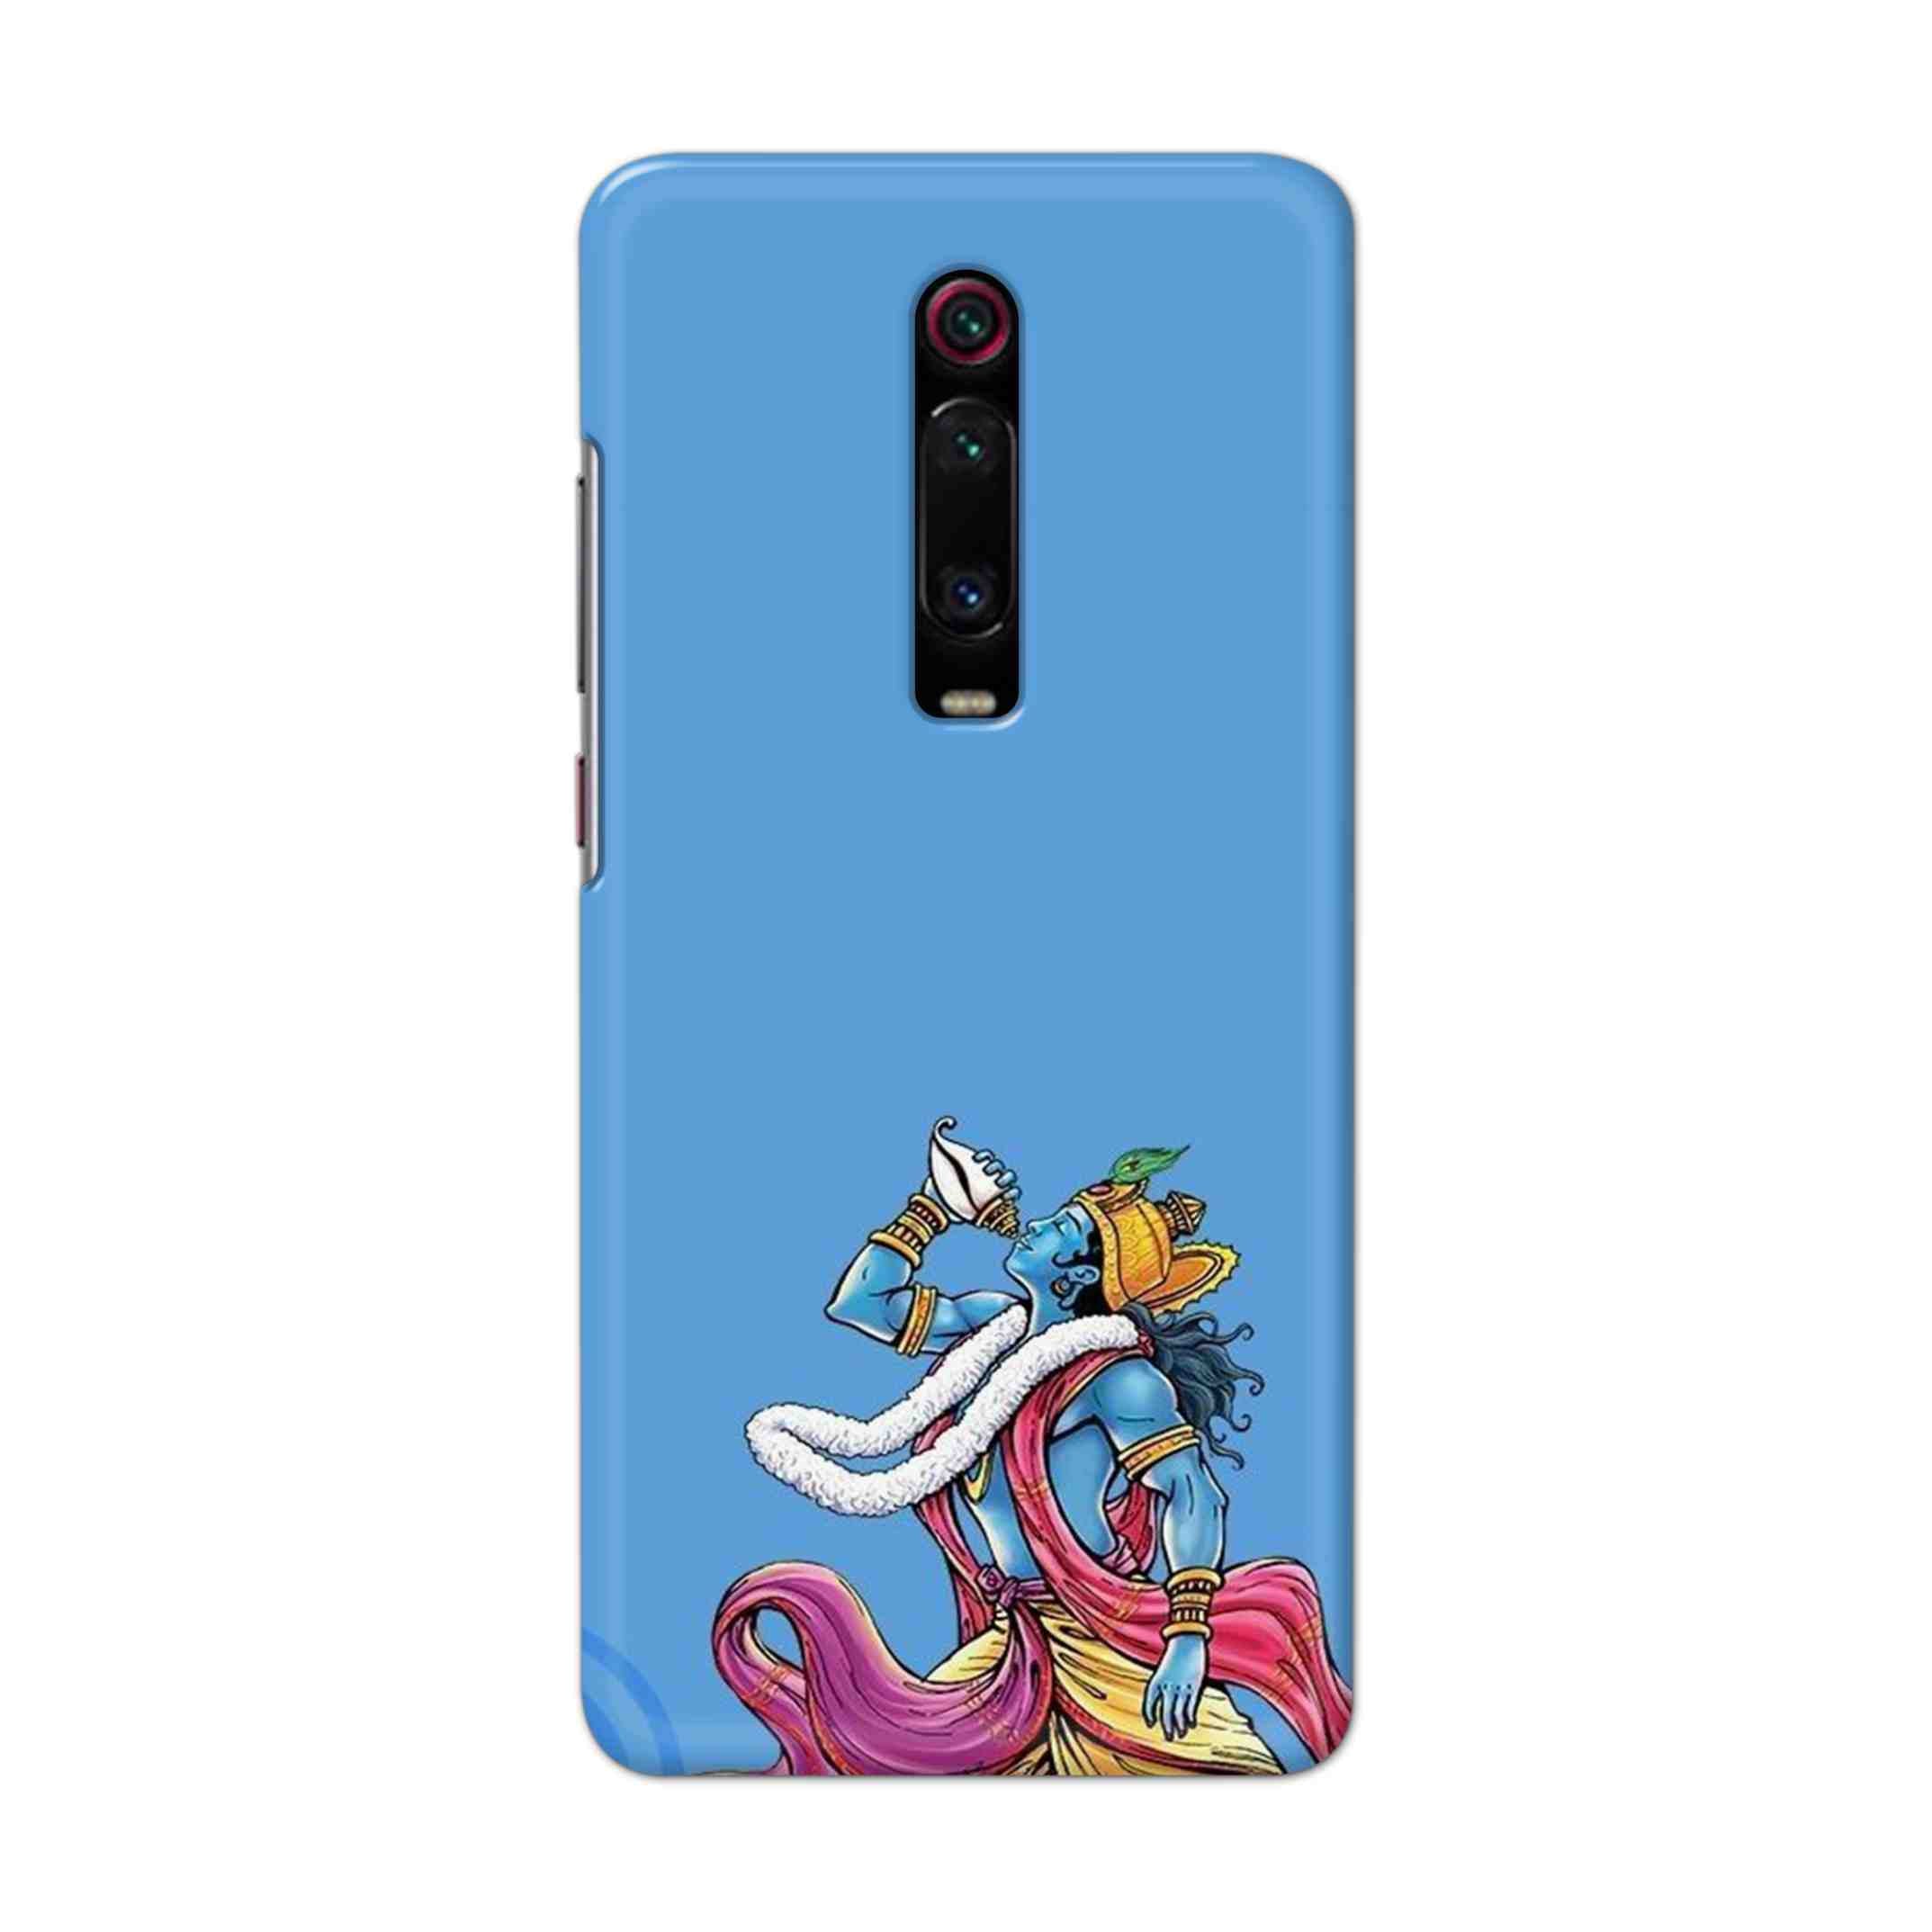 Buy Krishna Hard Back Mobile Phone Case Cover For Xiaomi Redmi K20 Online